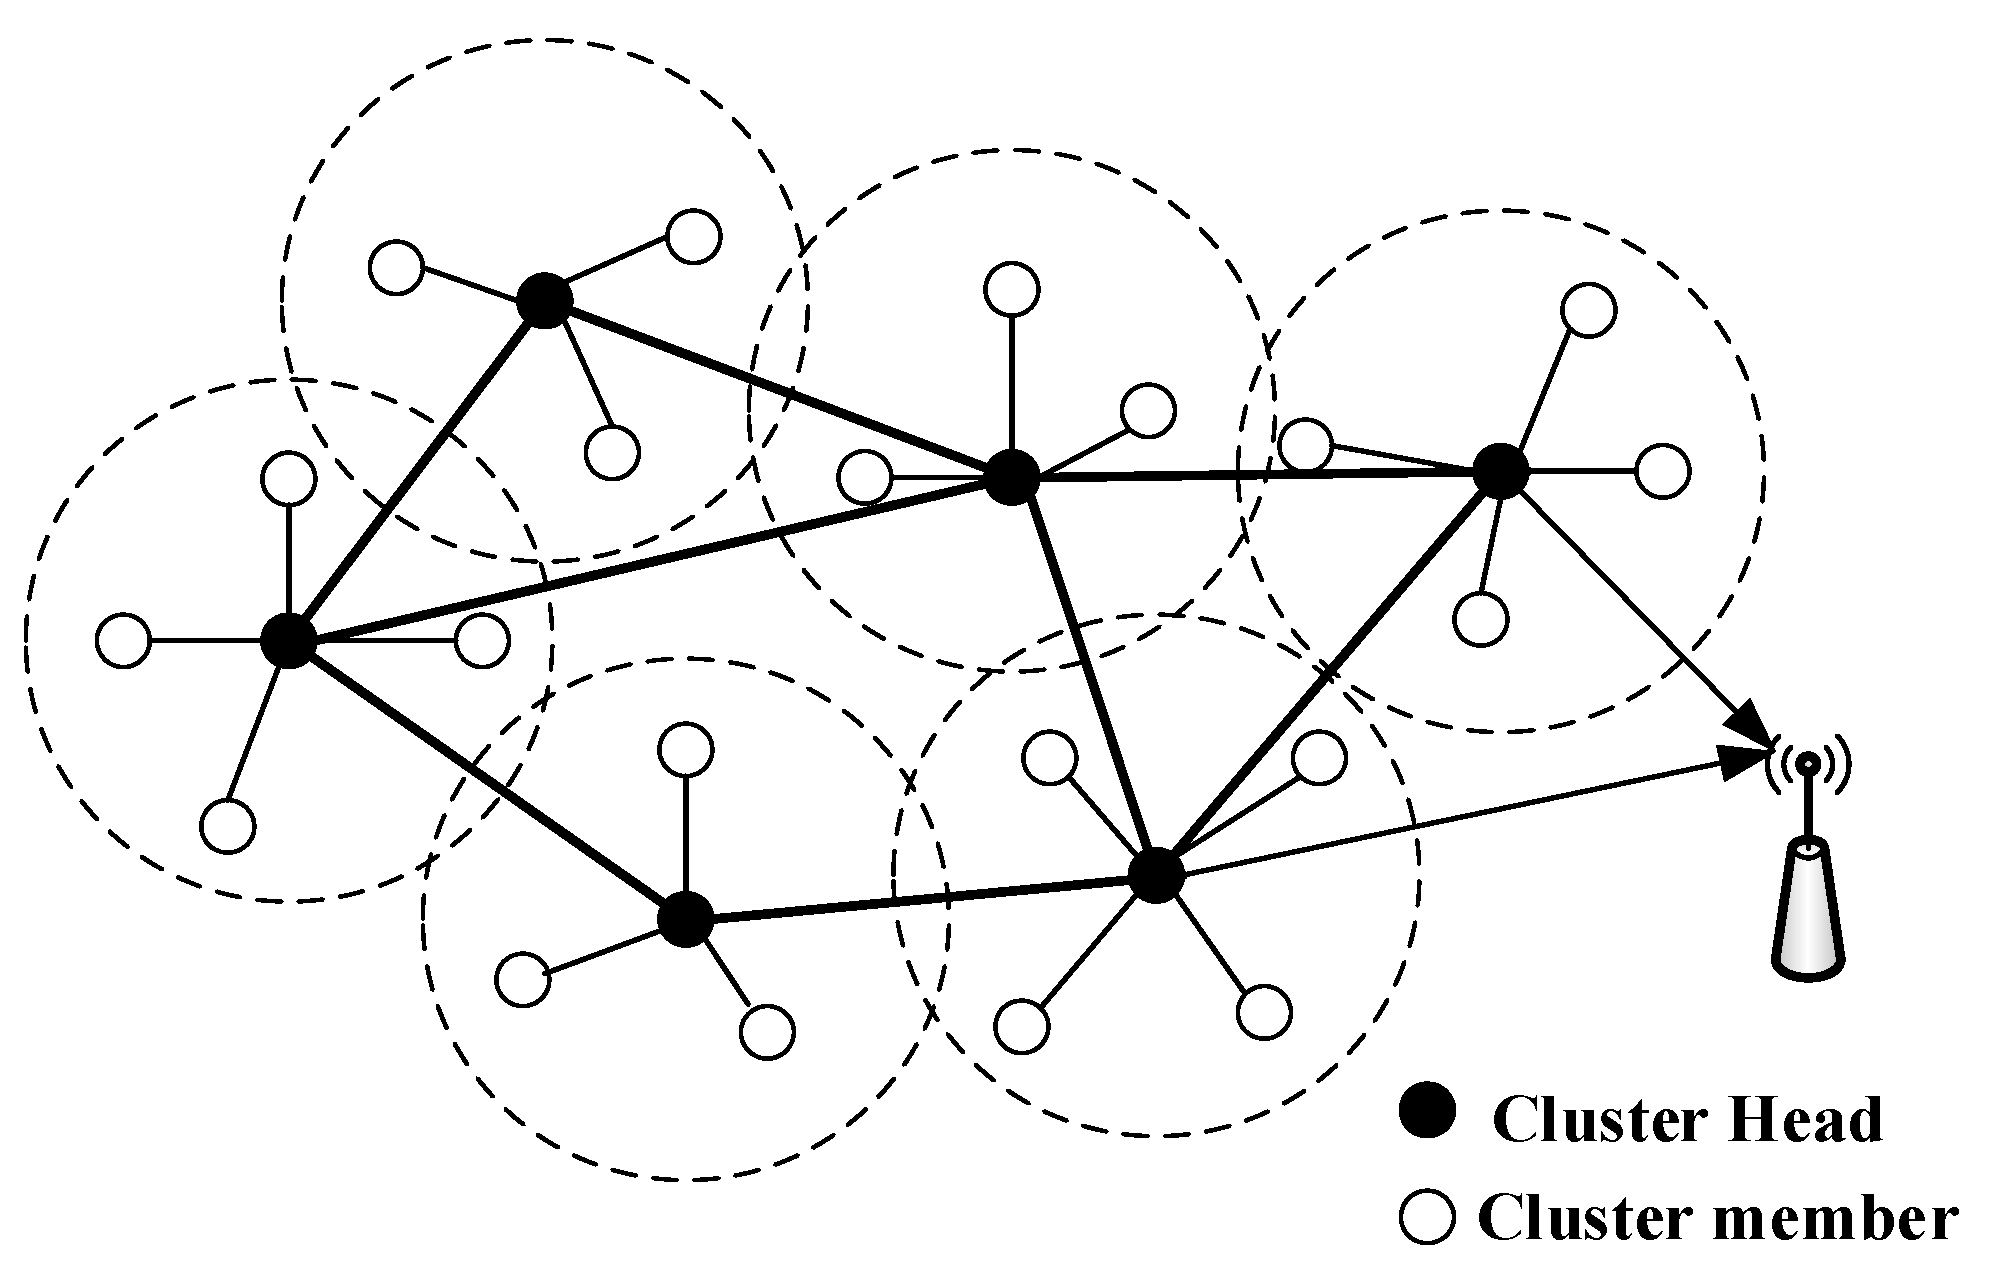 Com clustering. Кластер. Кластерная оптимизация ue5. Hungarian algorithm. Mdpi algorithms-logo.